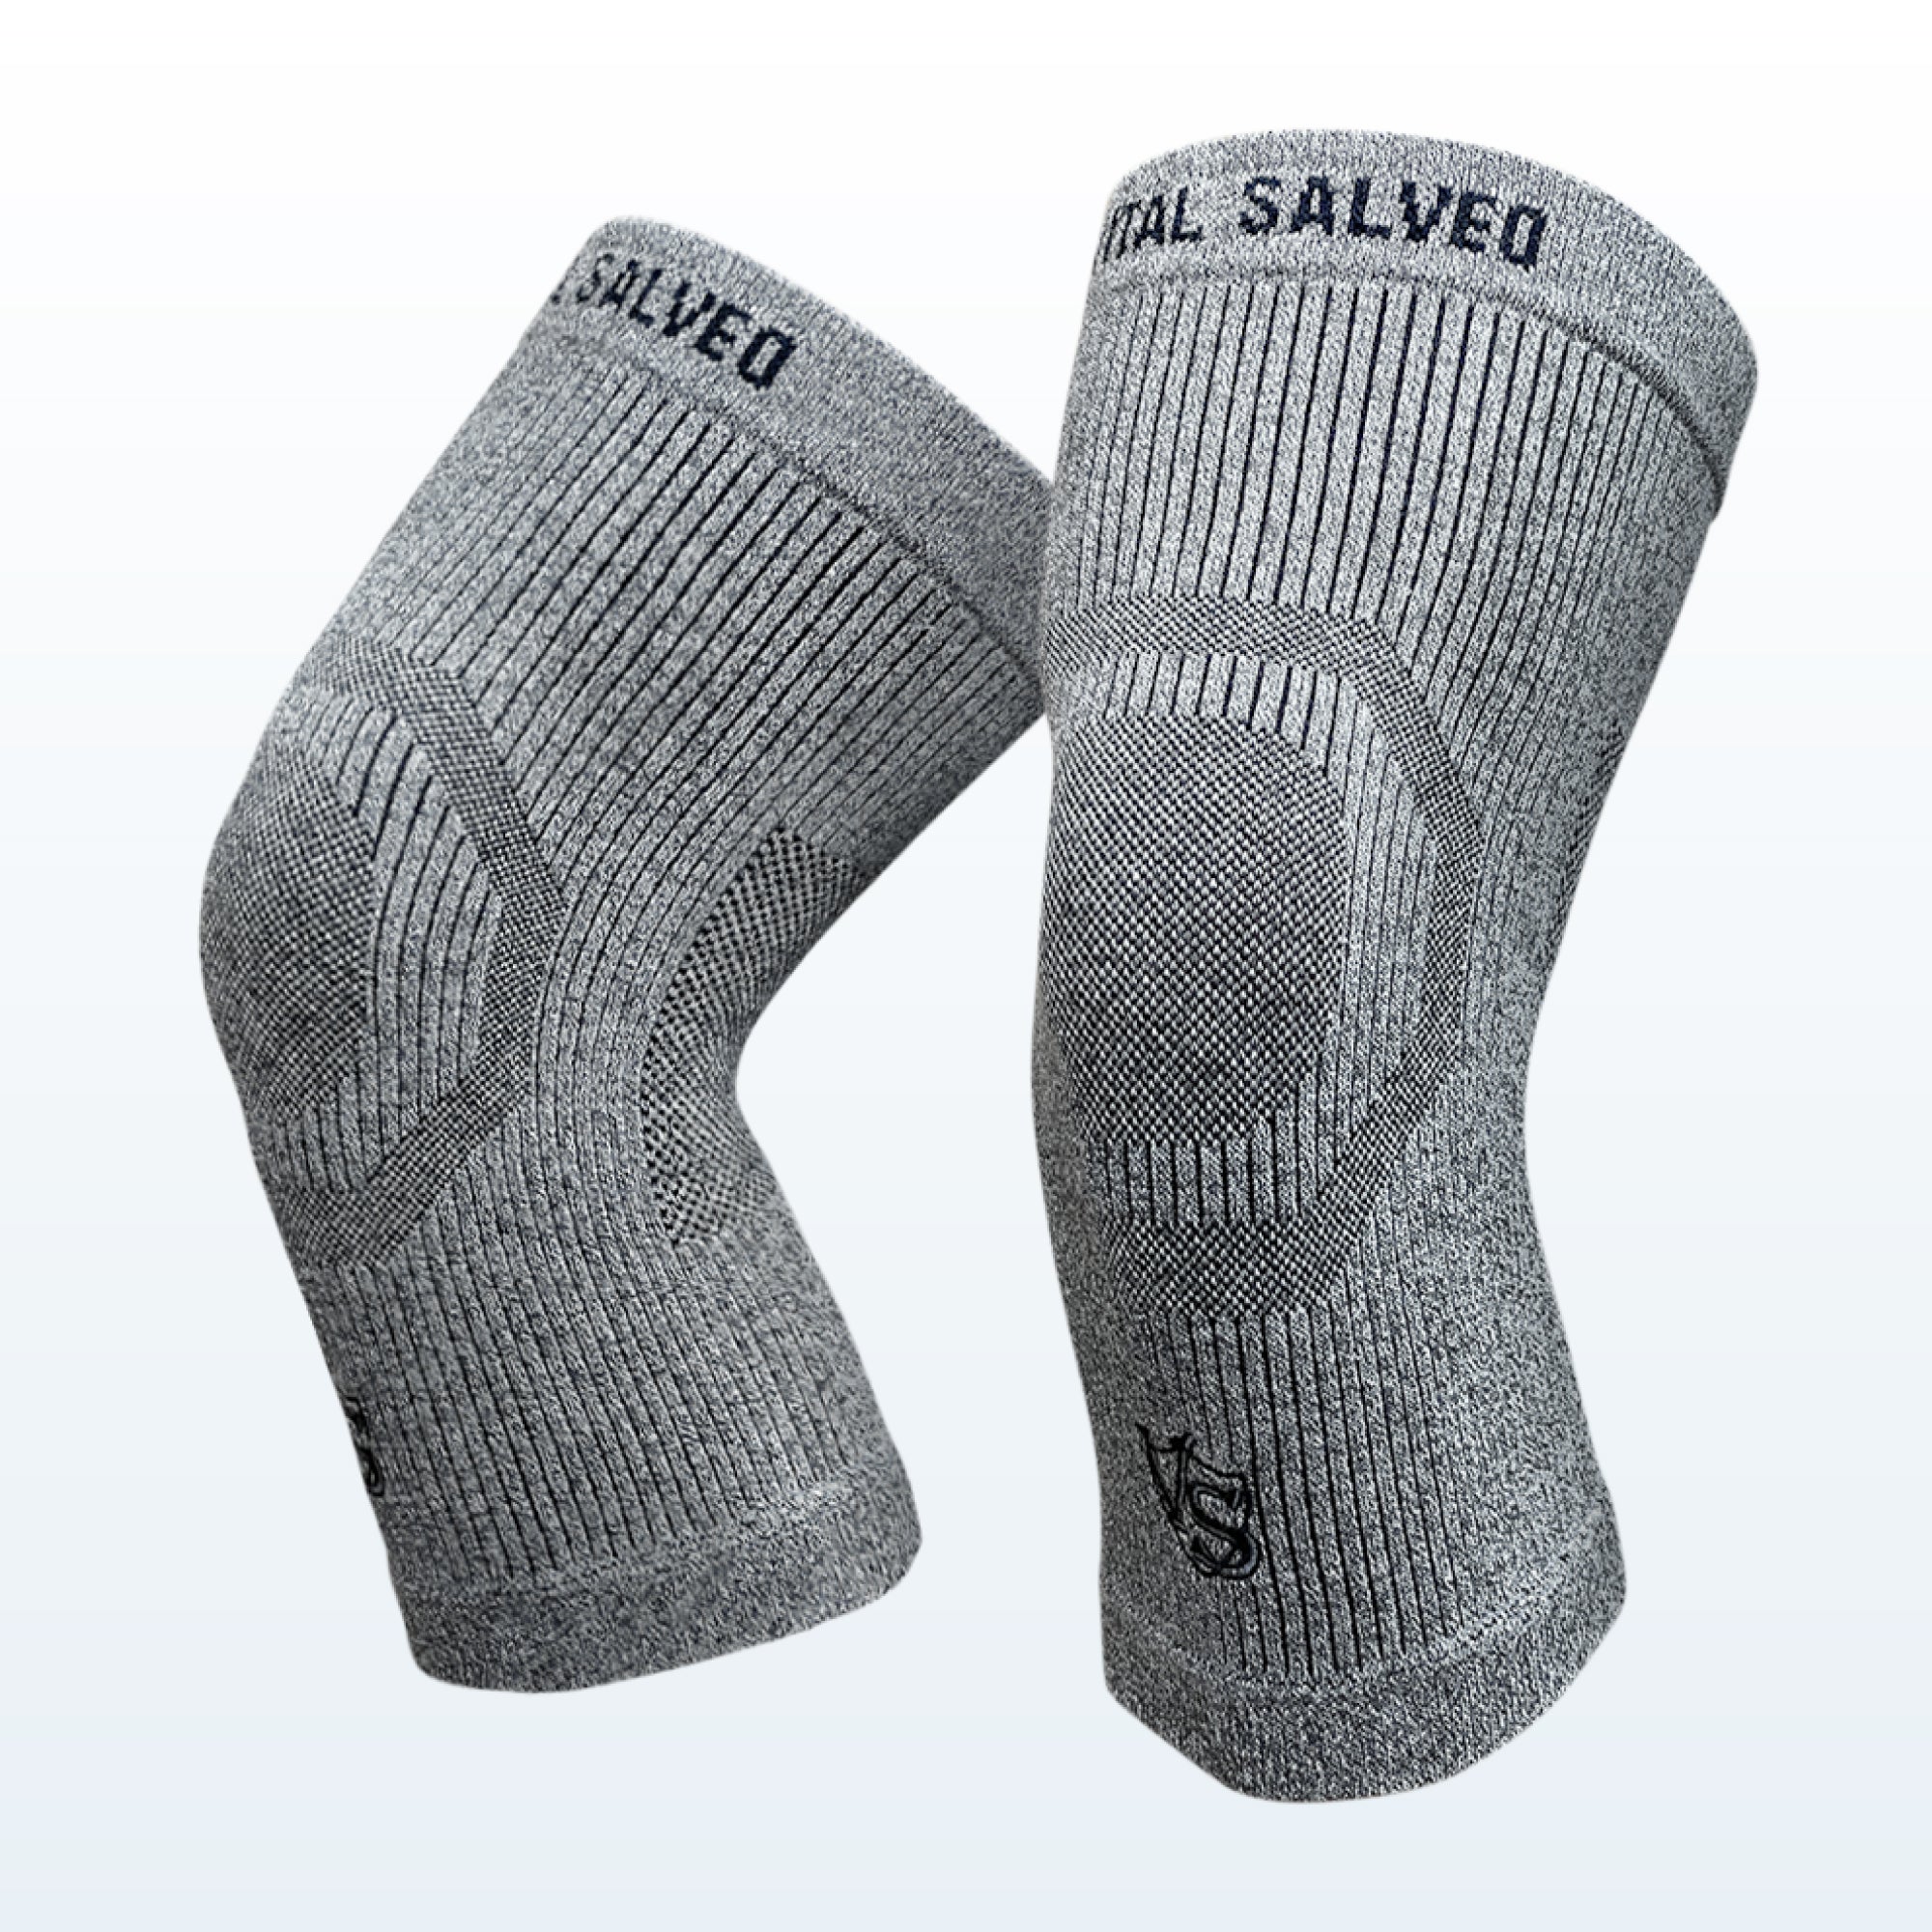 3D Knit Knee Sleeve/Brace C3-COMFORT (Pair) - Vital Salveo